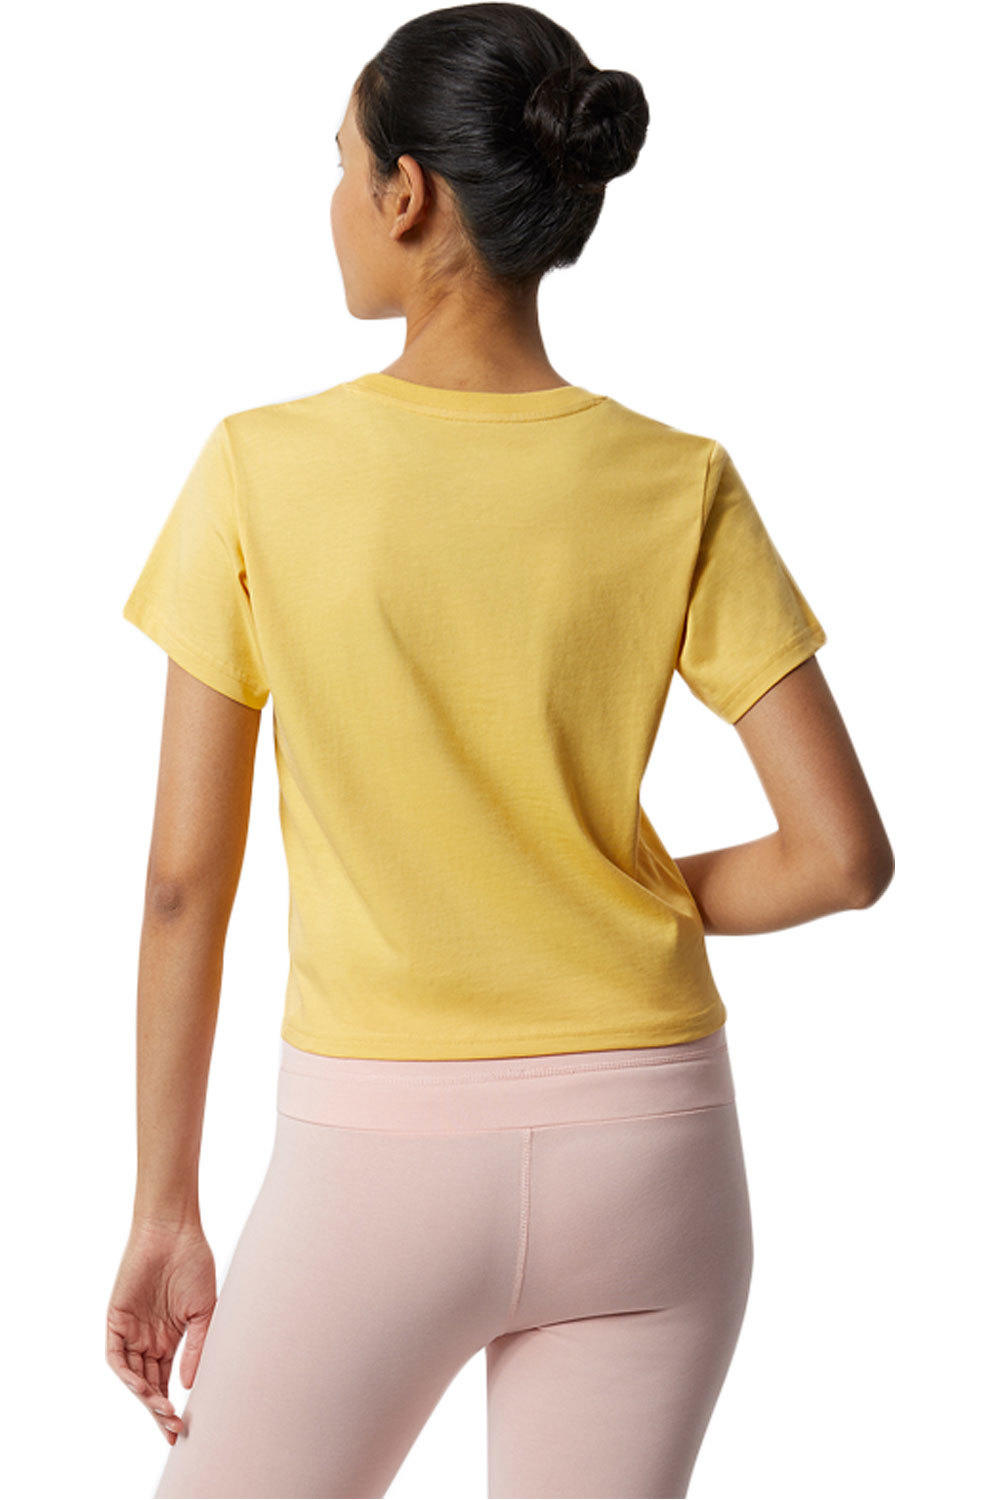 New Balance camiseta manga corta mujer WT21555 vista trasera